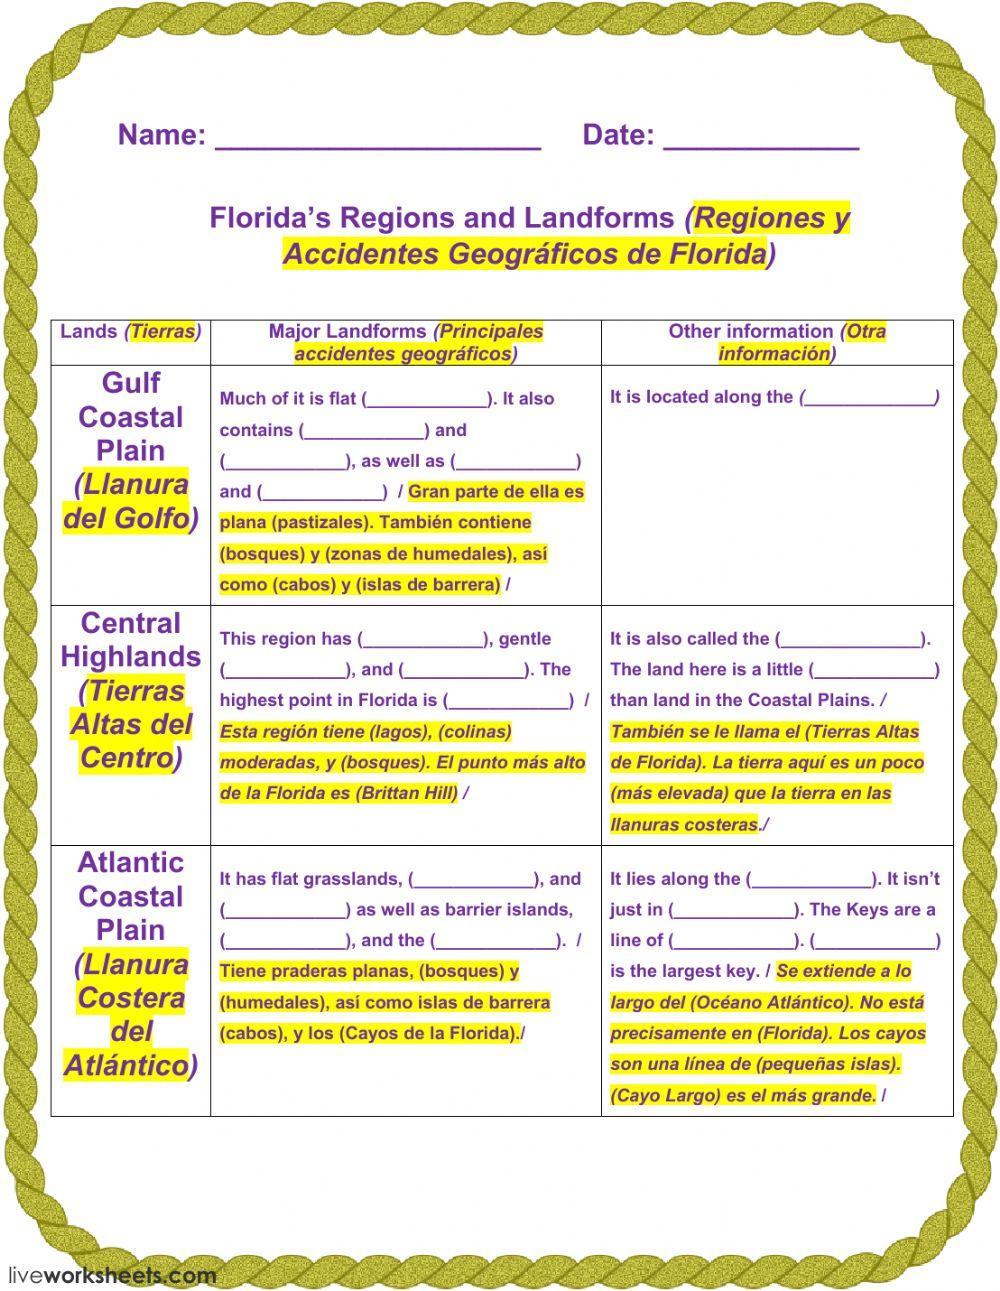 Florida’s Regions and Landforms-1 